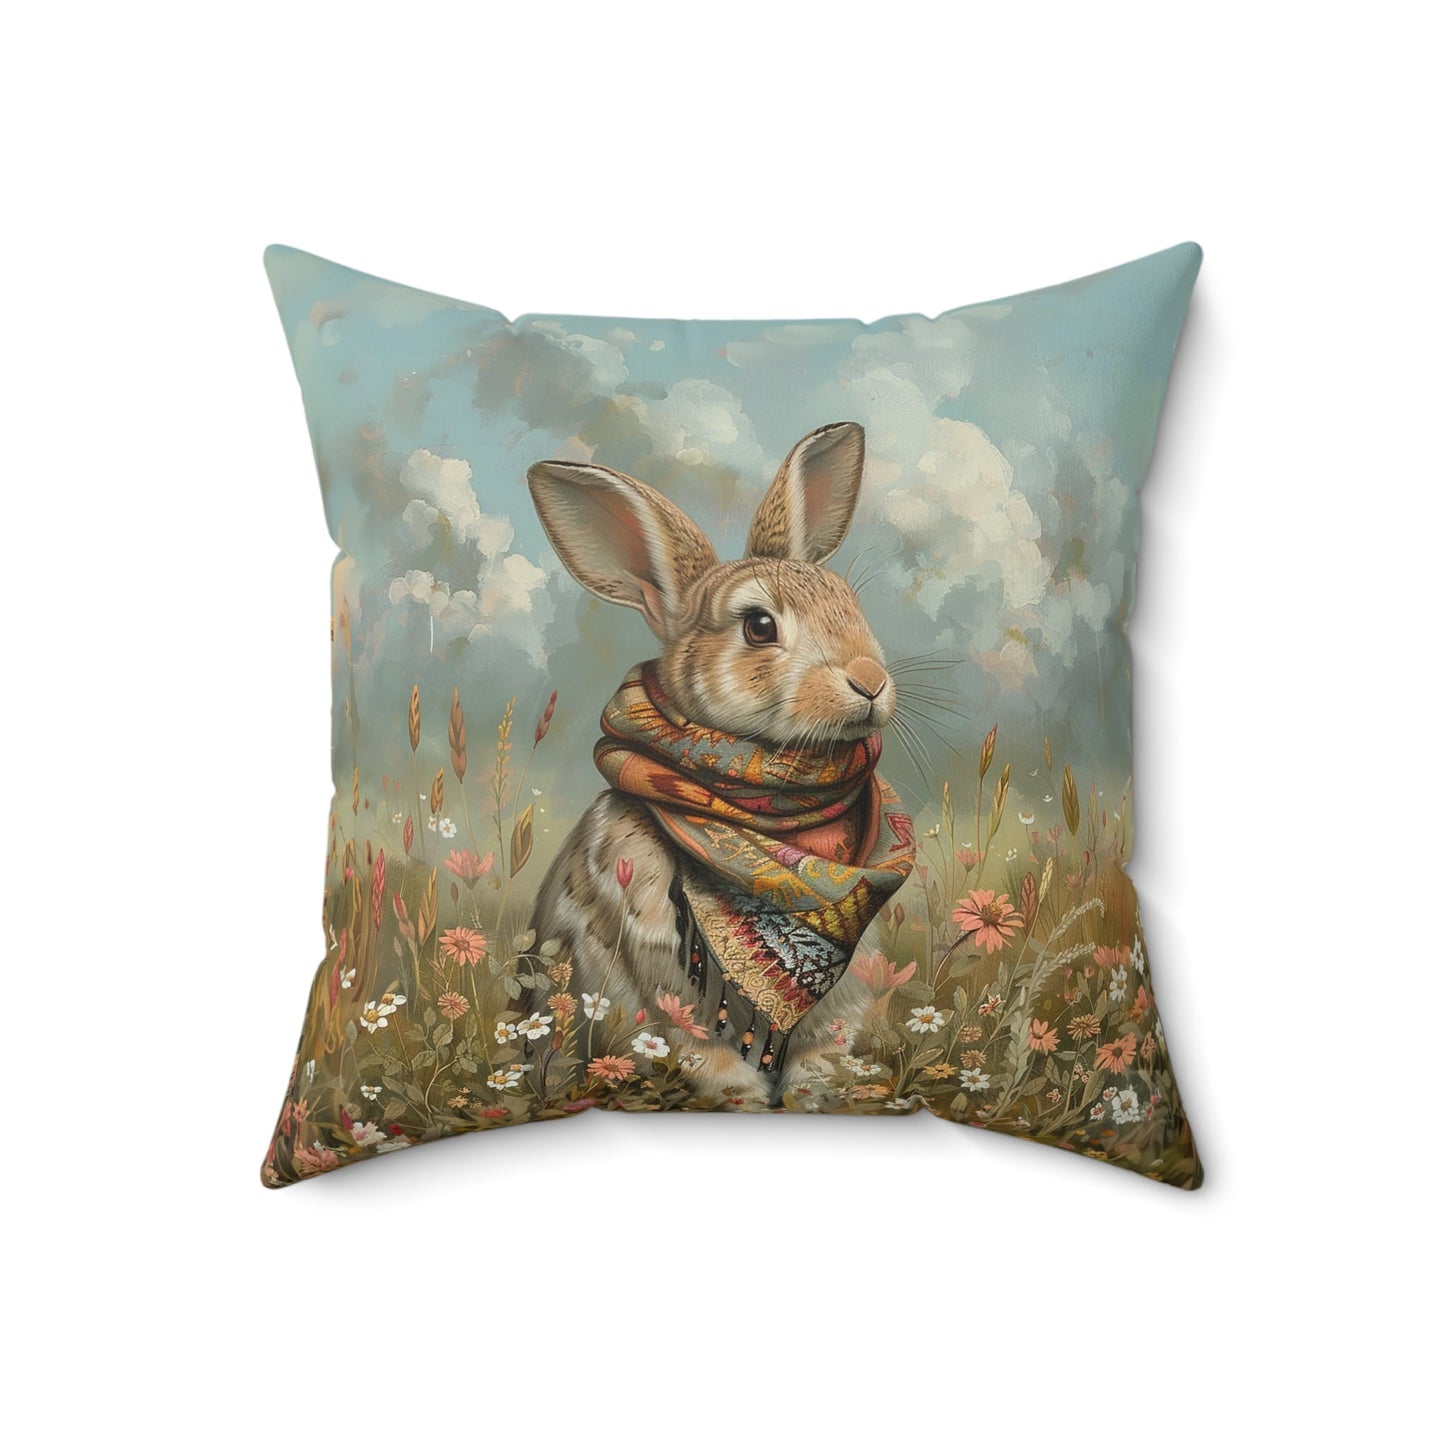 Cute Vintage Storybook Rabbit Pillow with Colorful Scarf in Wildflowers - FlooredByArt